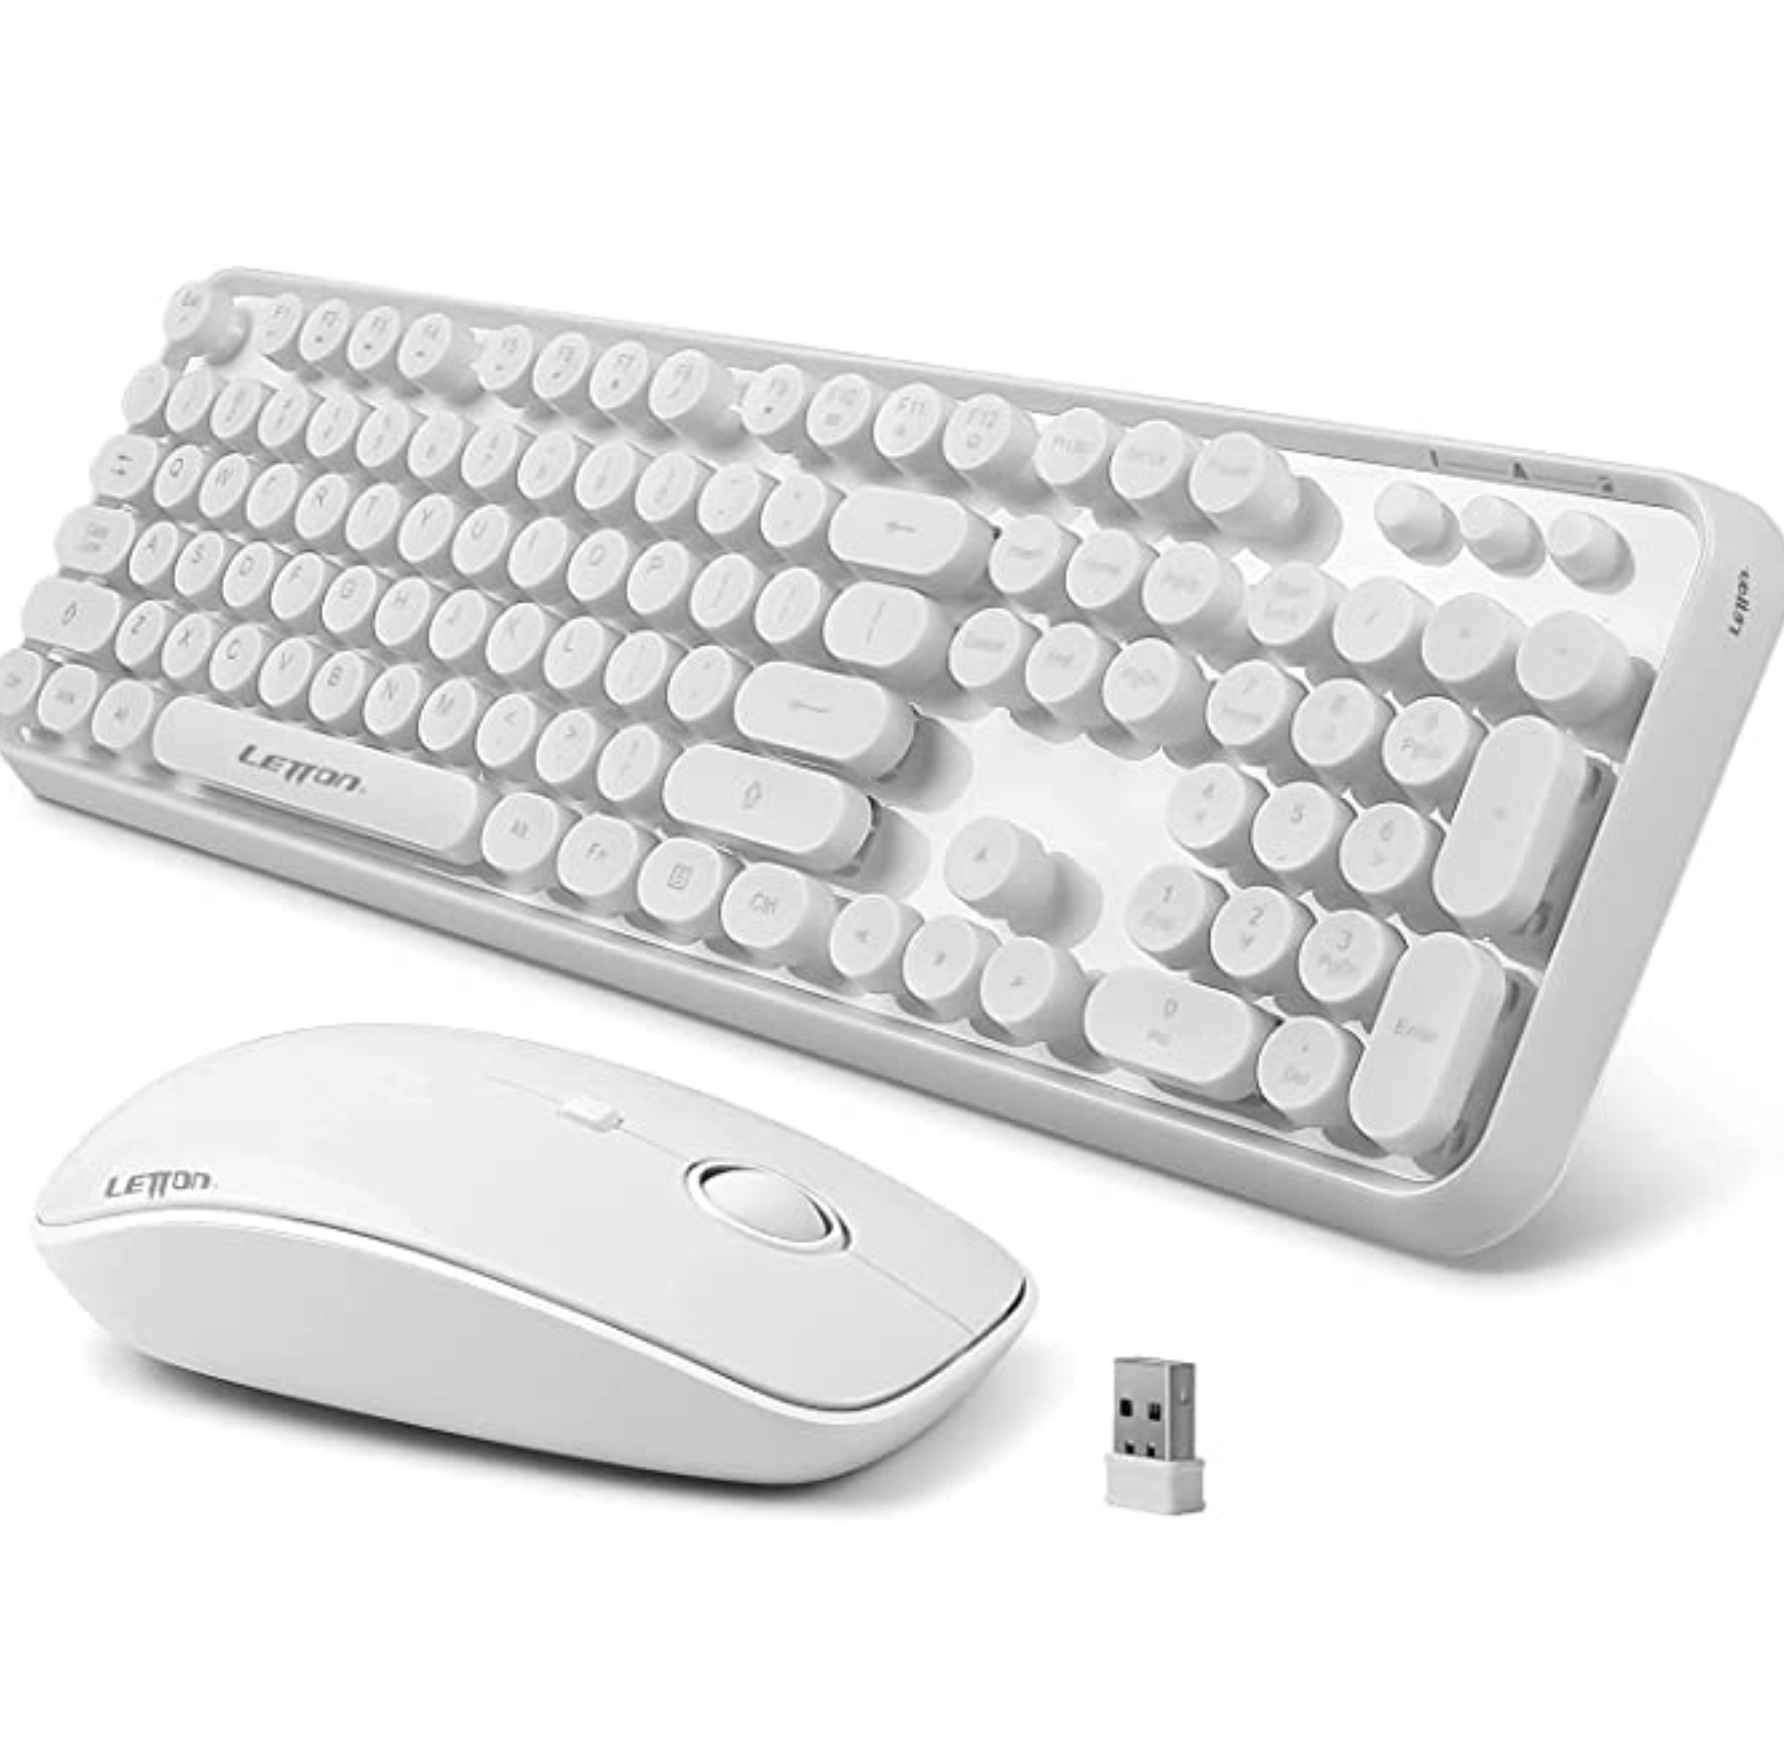 white aesthetic keyboard